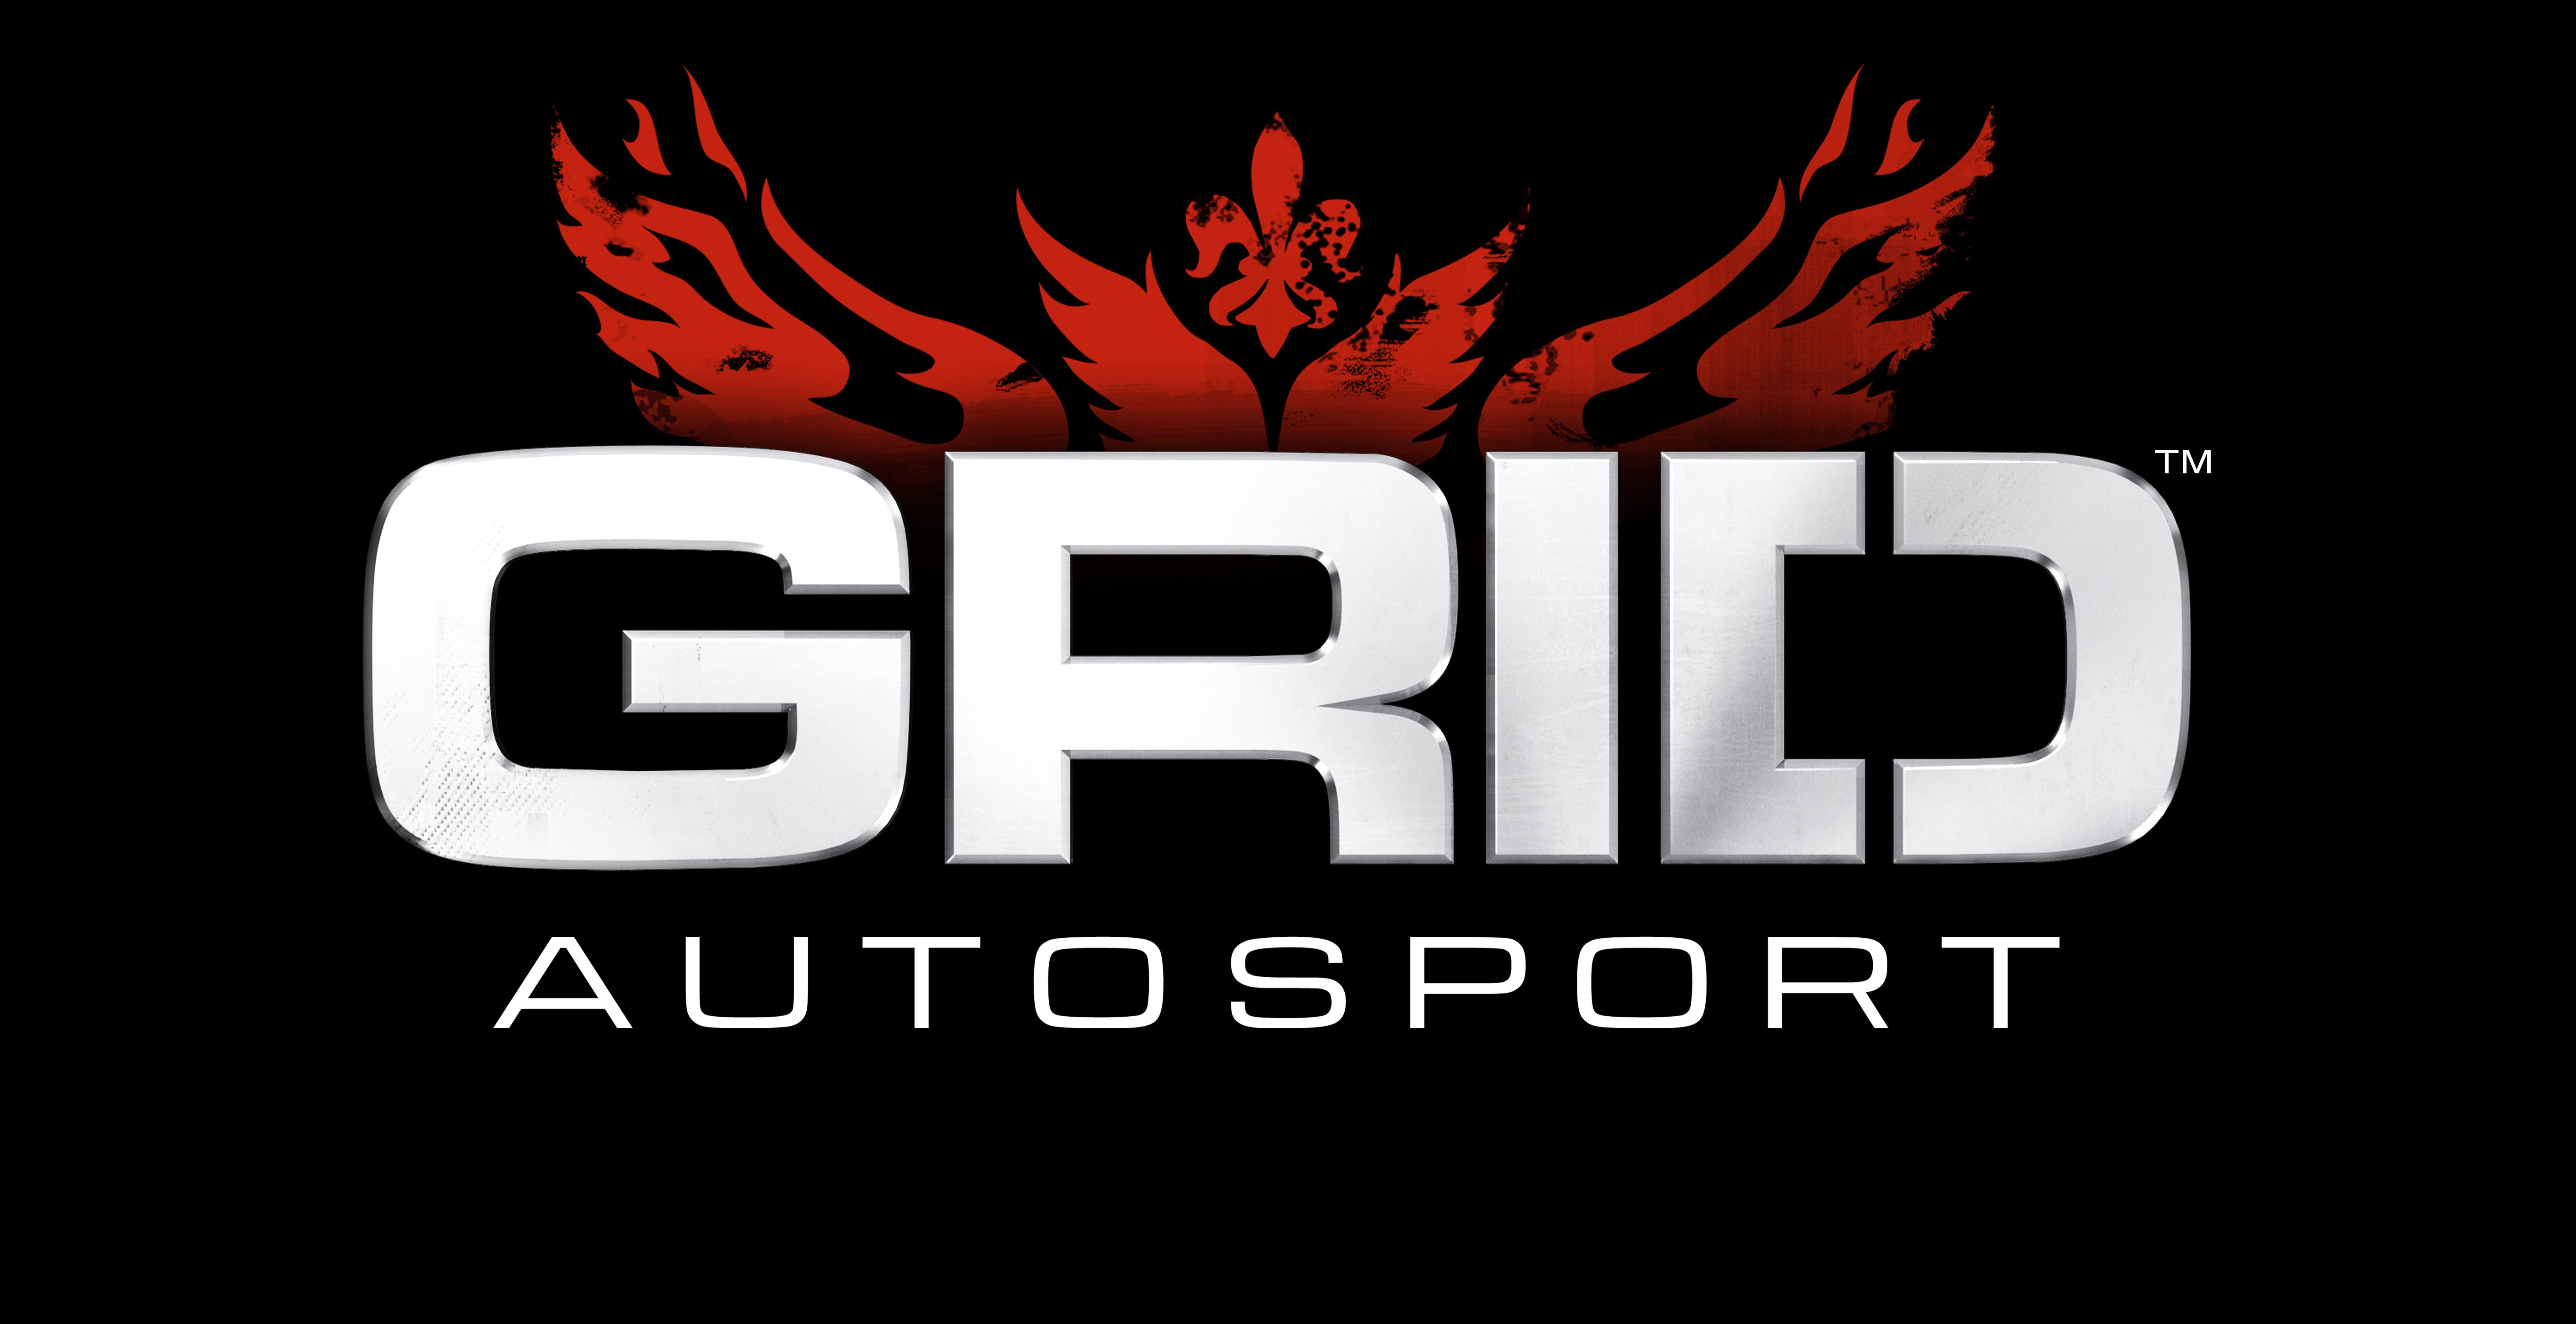 GRID AUTOSPORT logo NEG 4